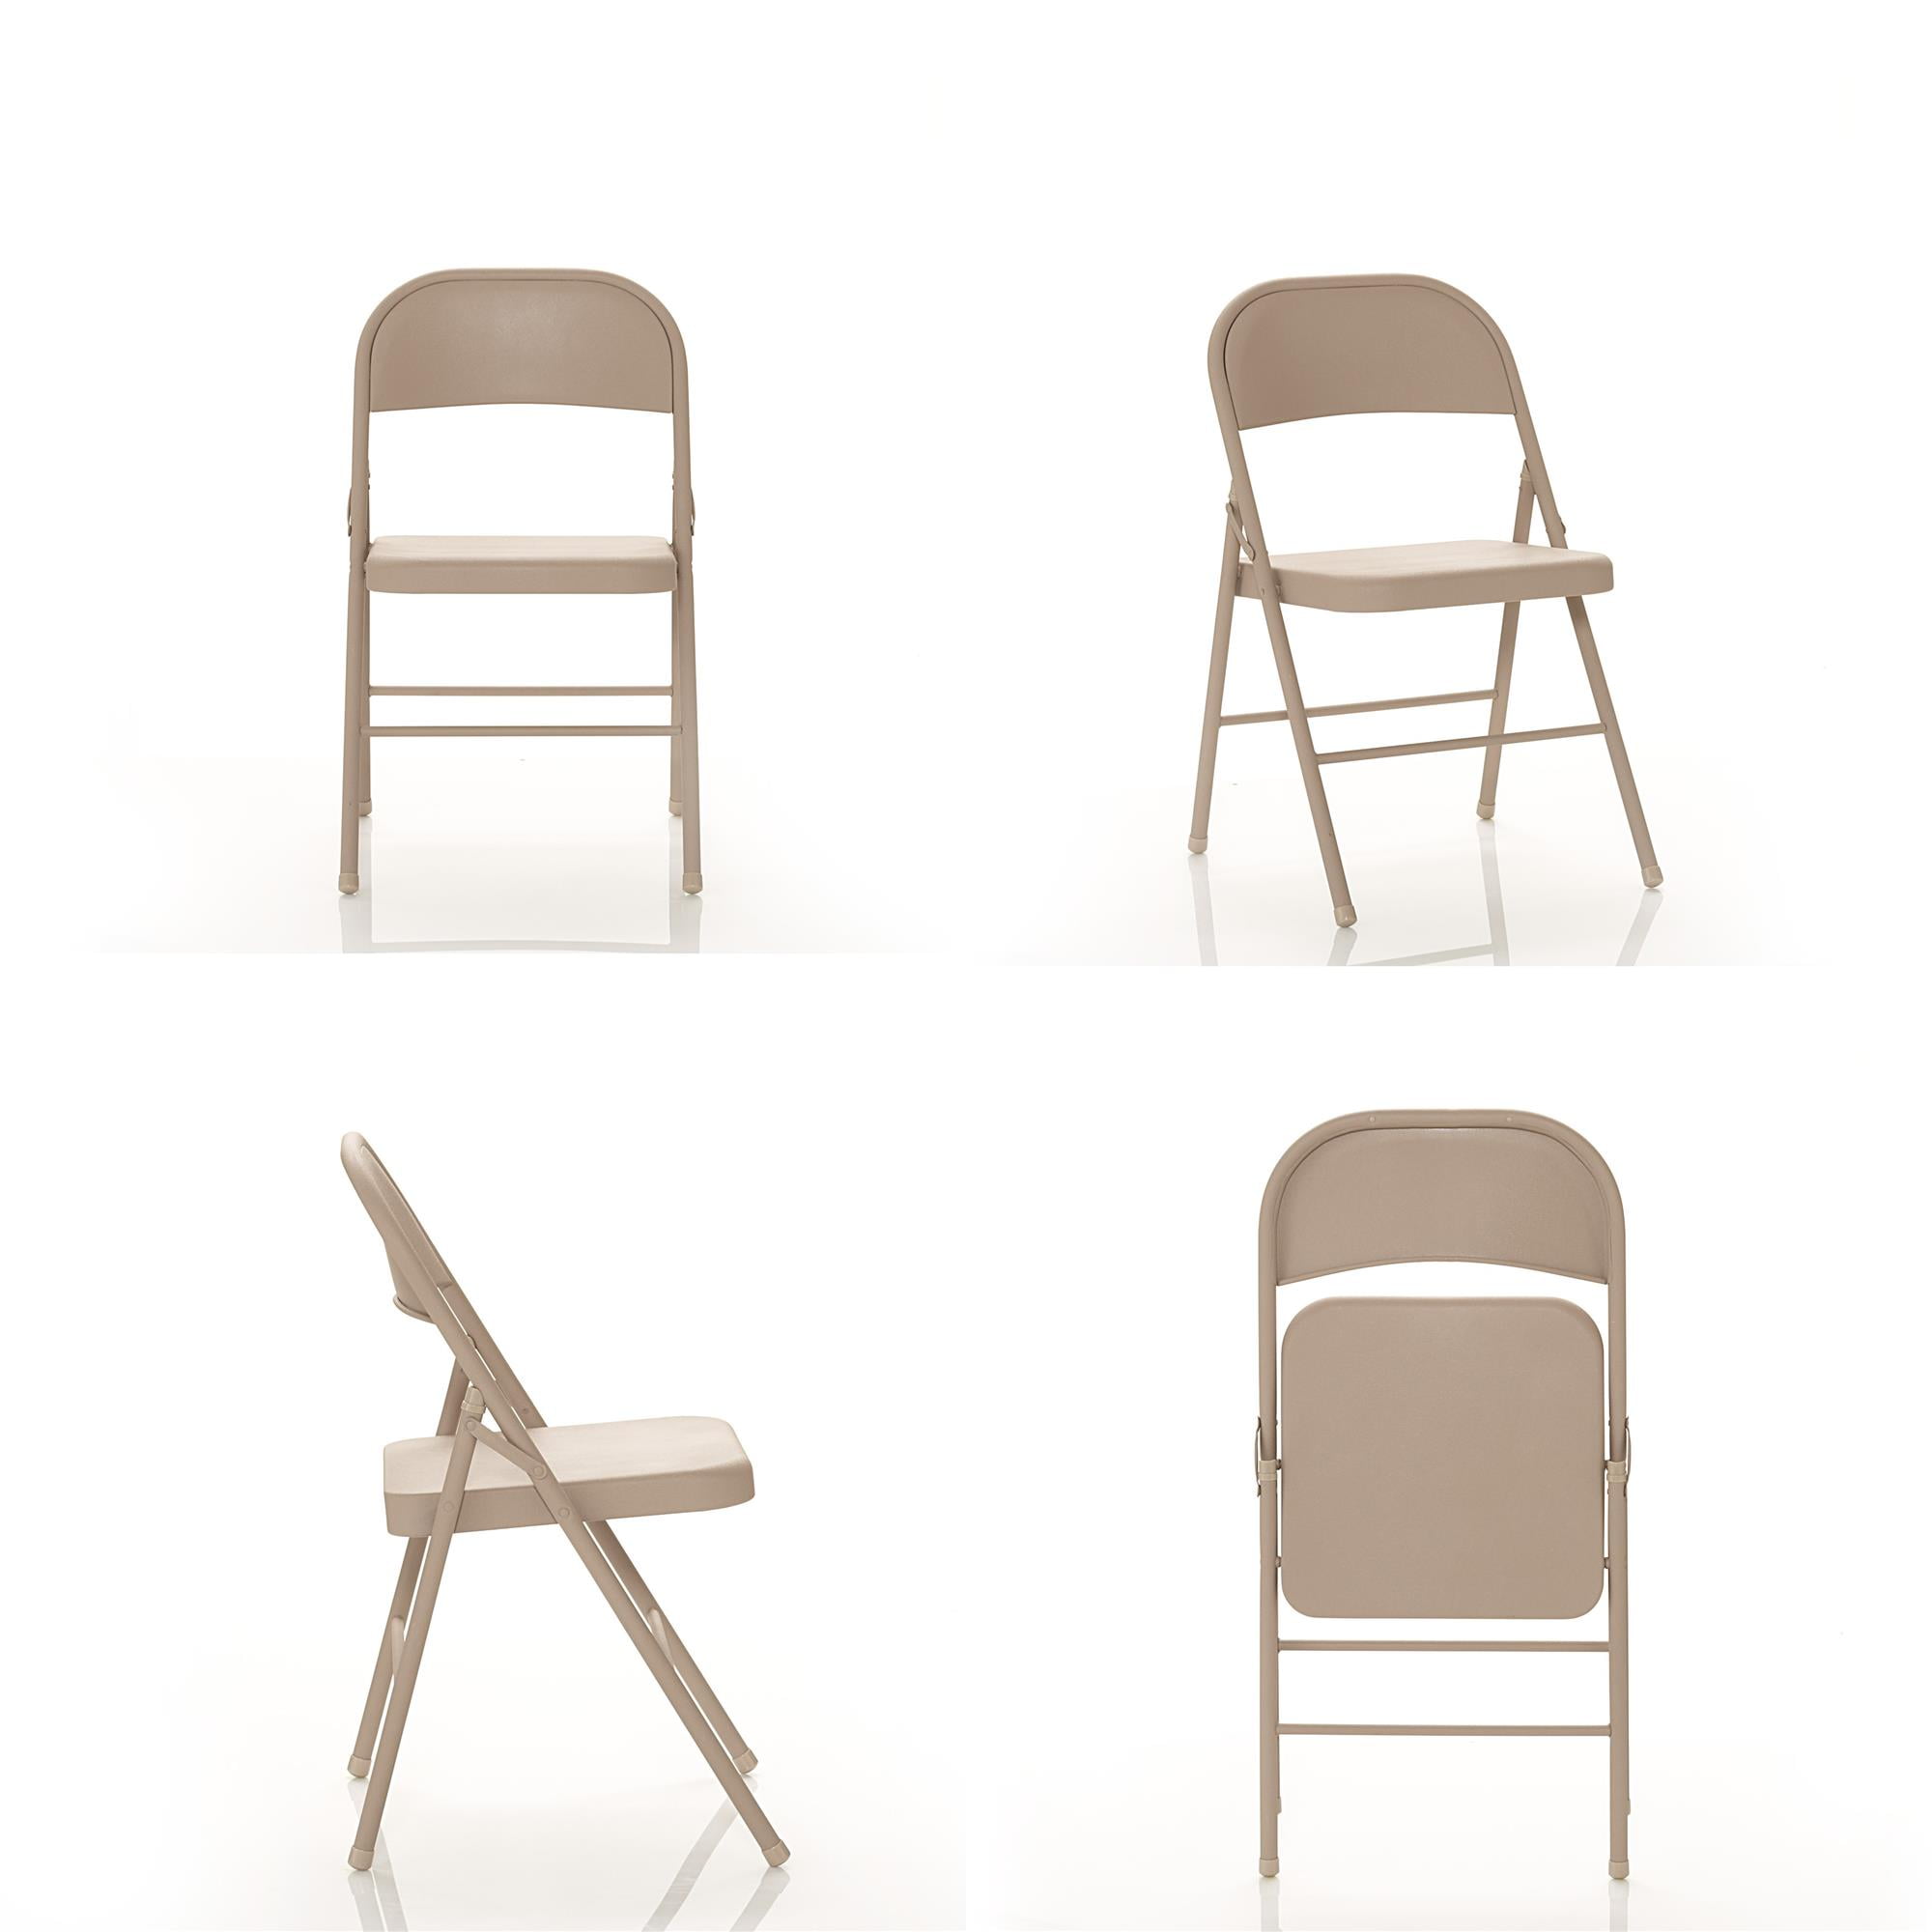 Mainstays Steel Folding Chair (4 Pack), Beige - 1